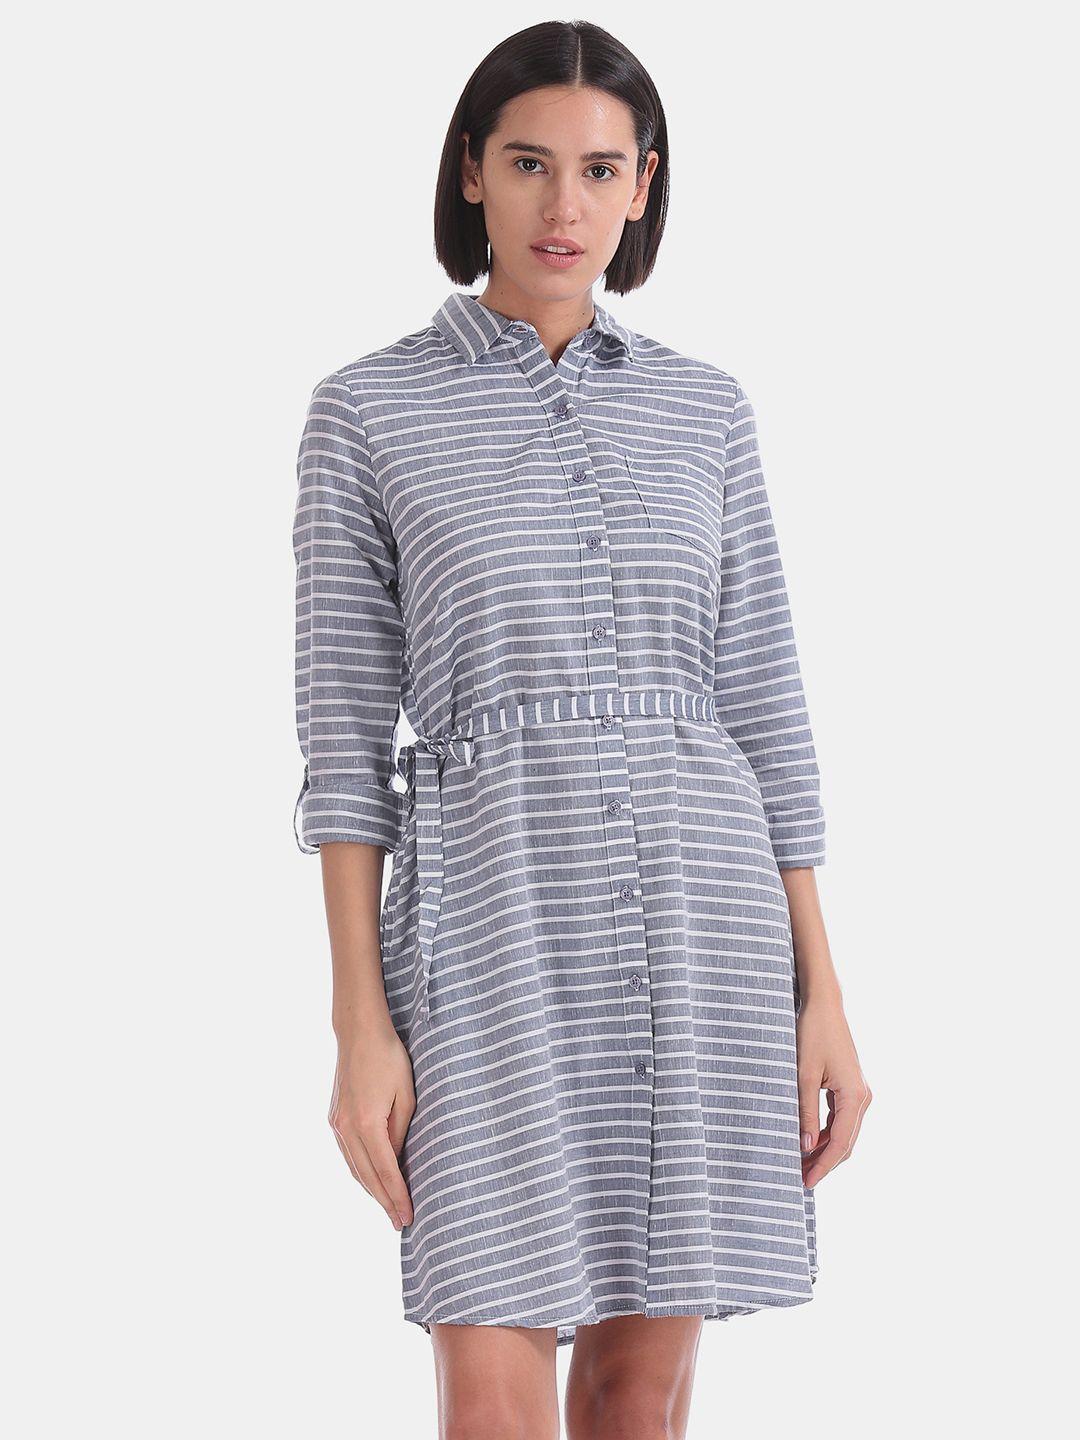 u.s. polo assn. women blue & white striped shirt dress